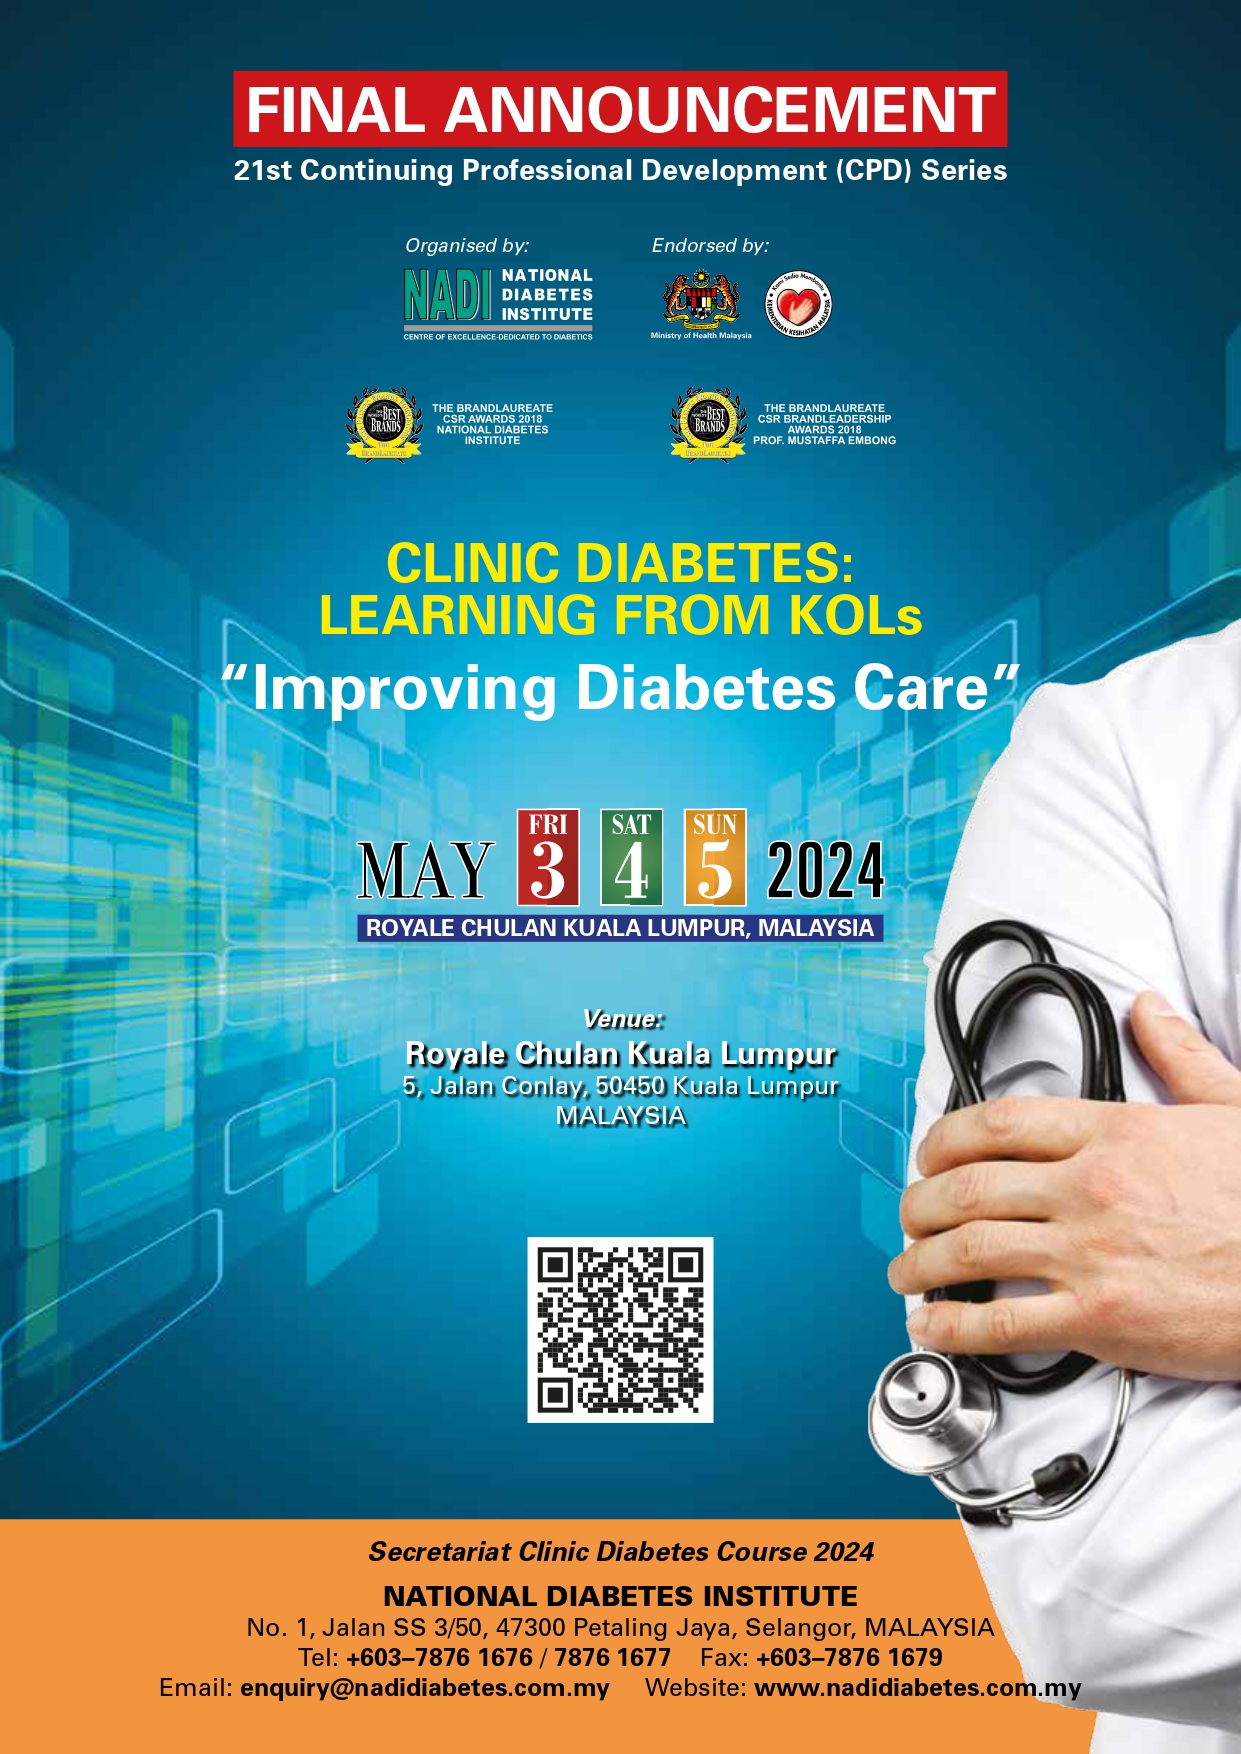 Clinic Diabetes: Learning from KOLs "Improving Diabetes Care", Kuala Lumpur, Malaysia